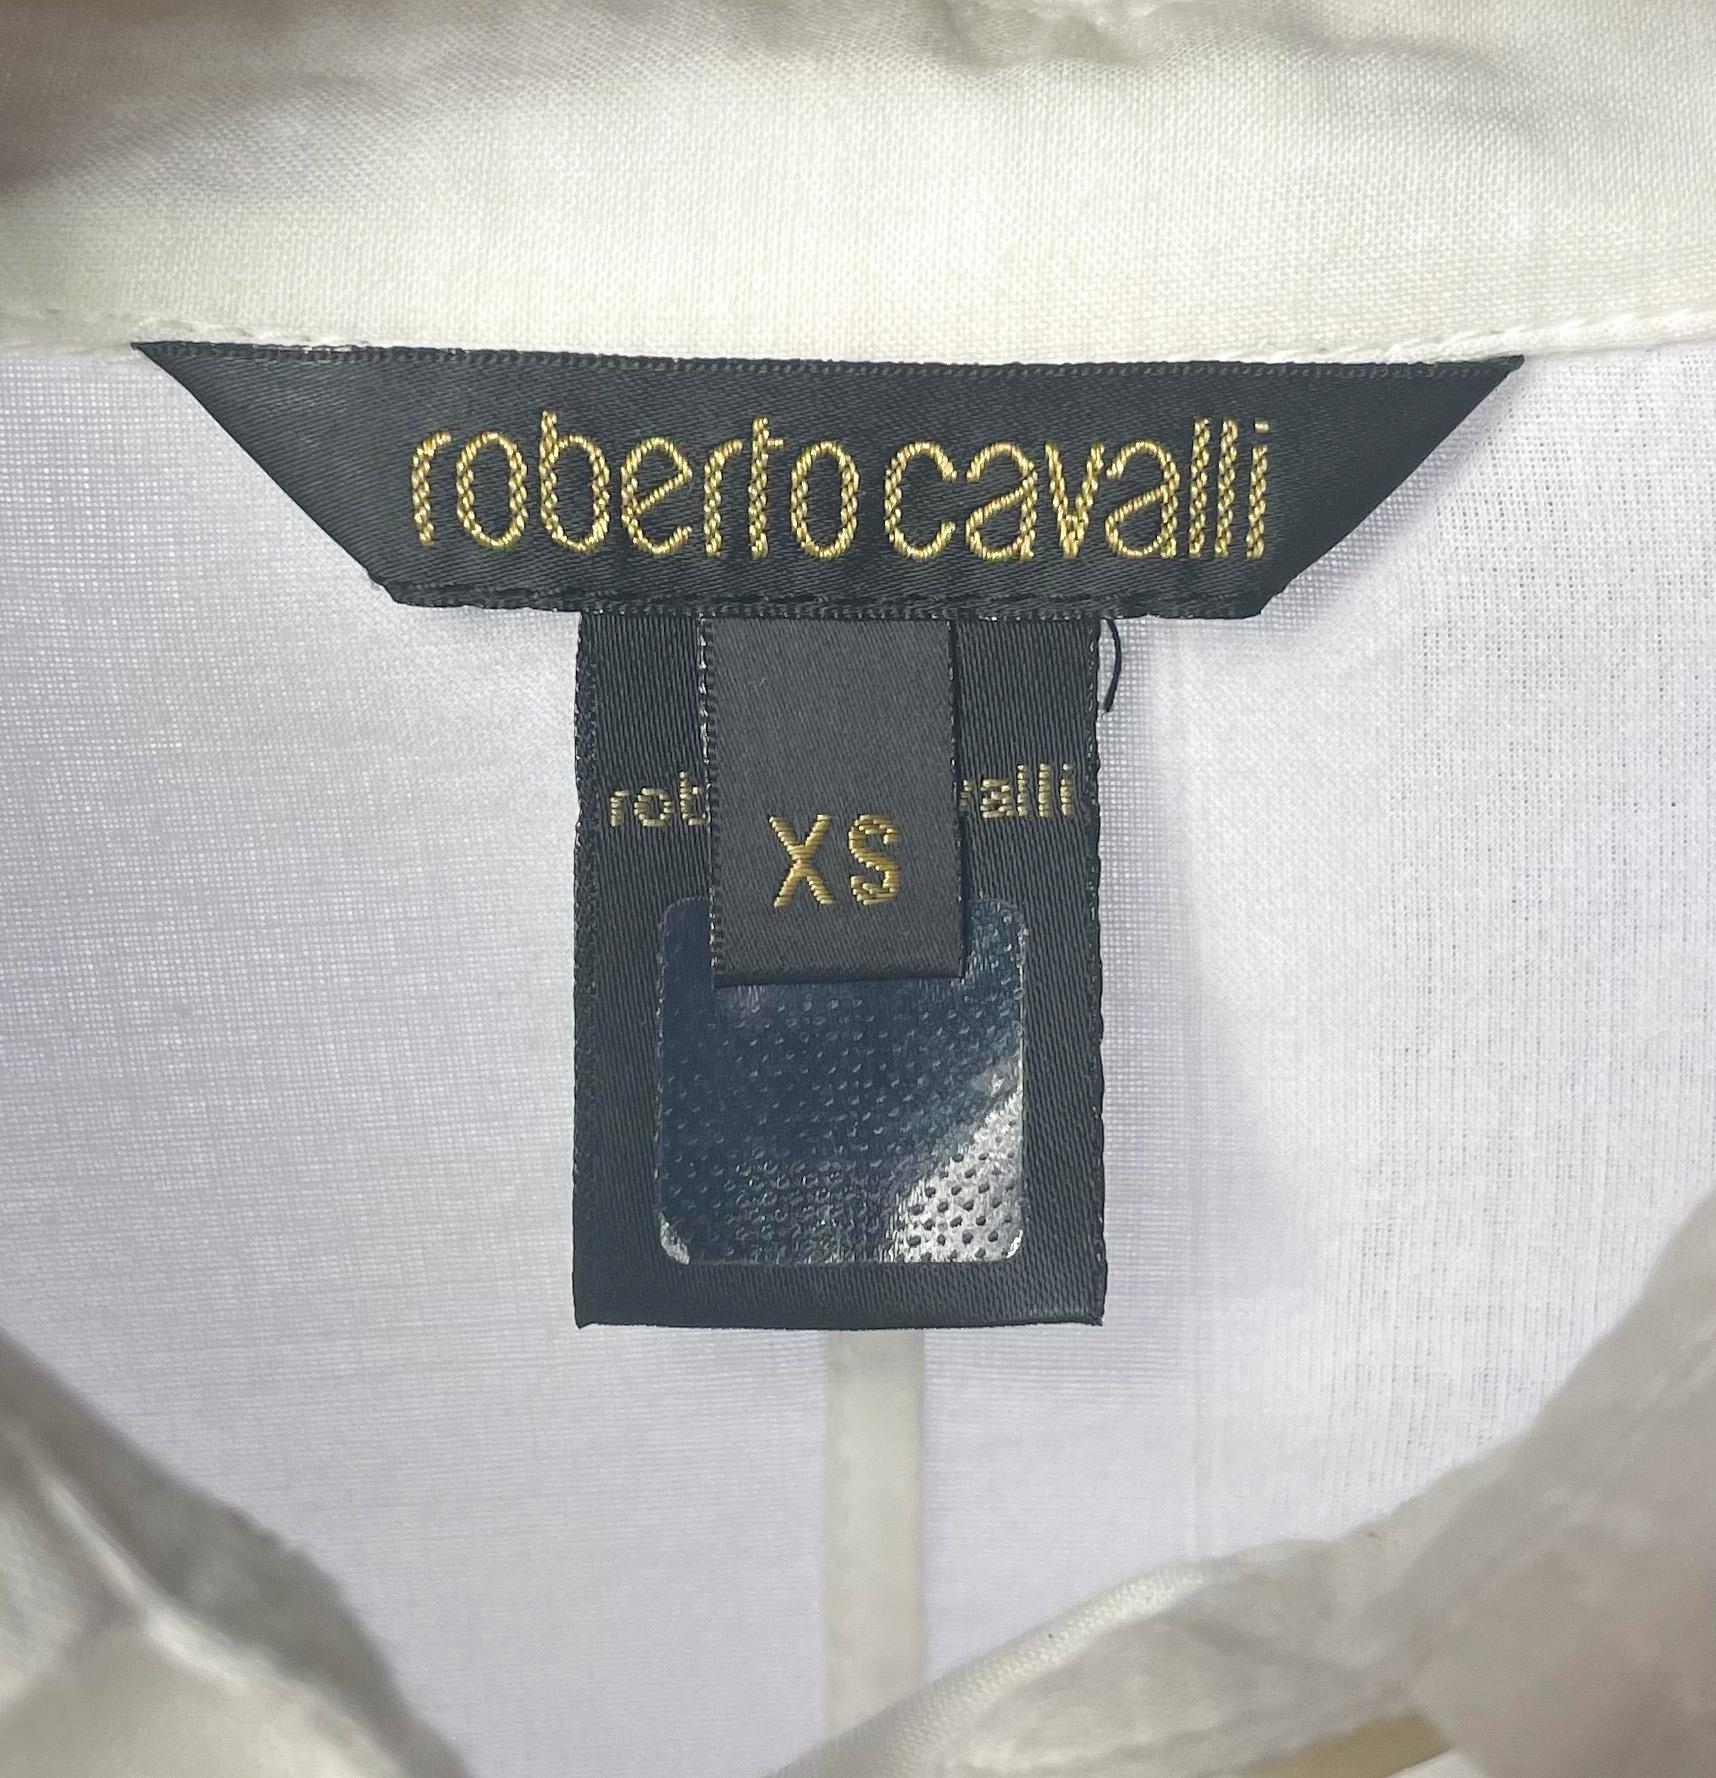 Roberto Cavalli shirt with rhinestone appliqué, 2004 For Sale 1